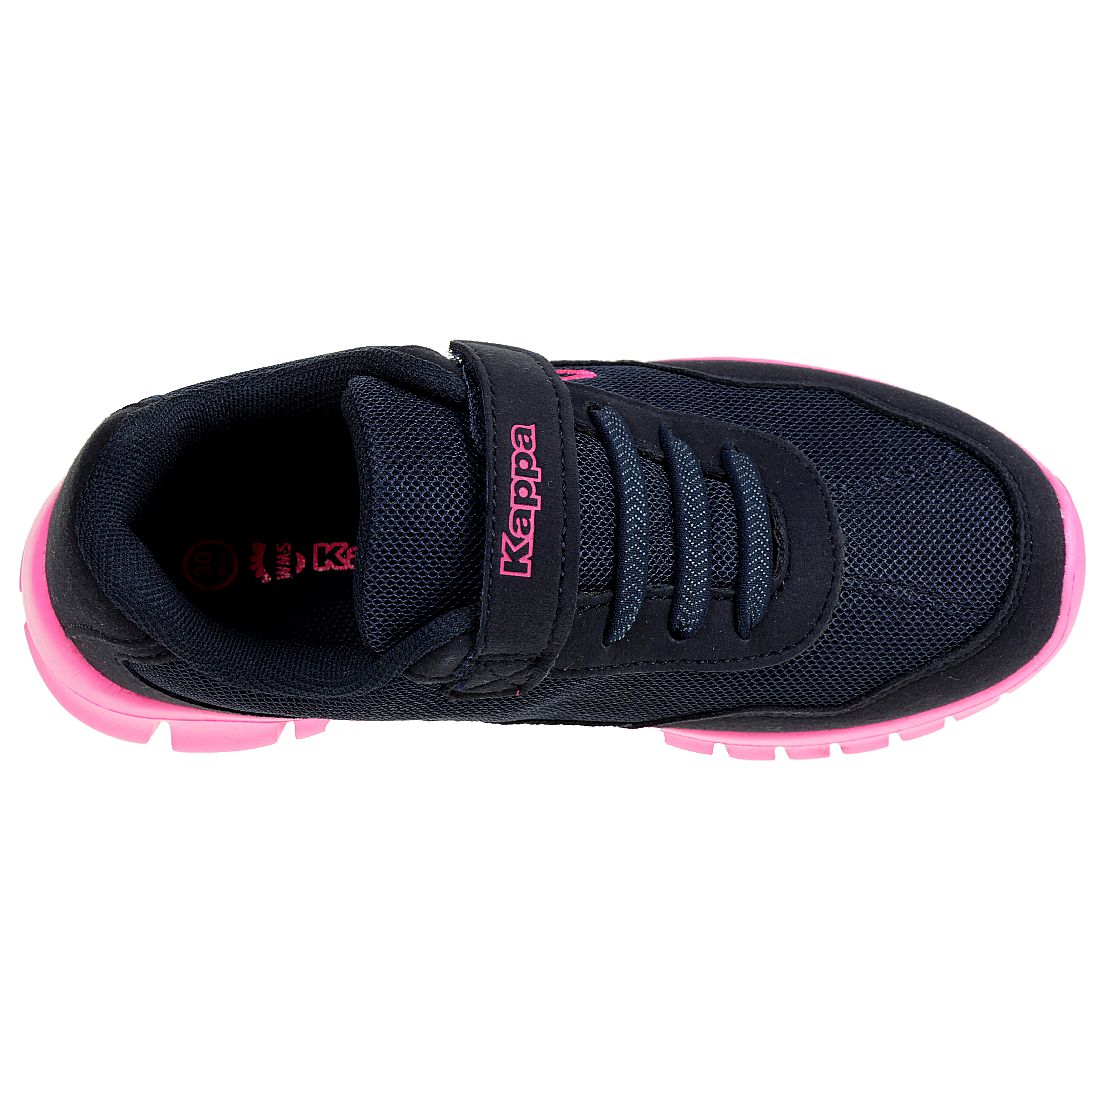 BC Kappa blau/pink K Sneaker Schuhe Mädchen Follow